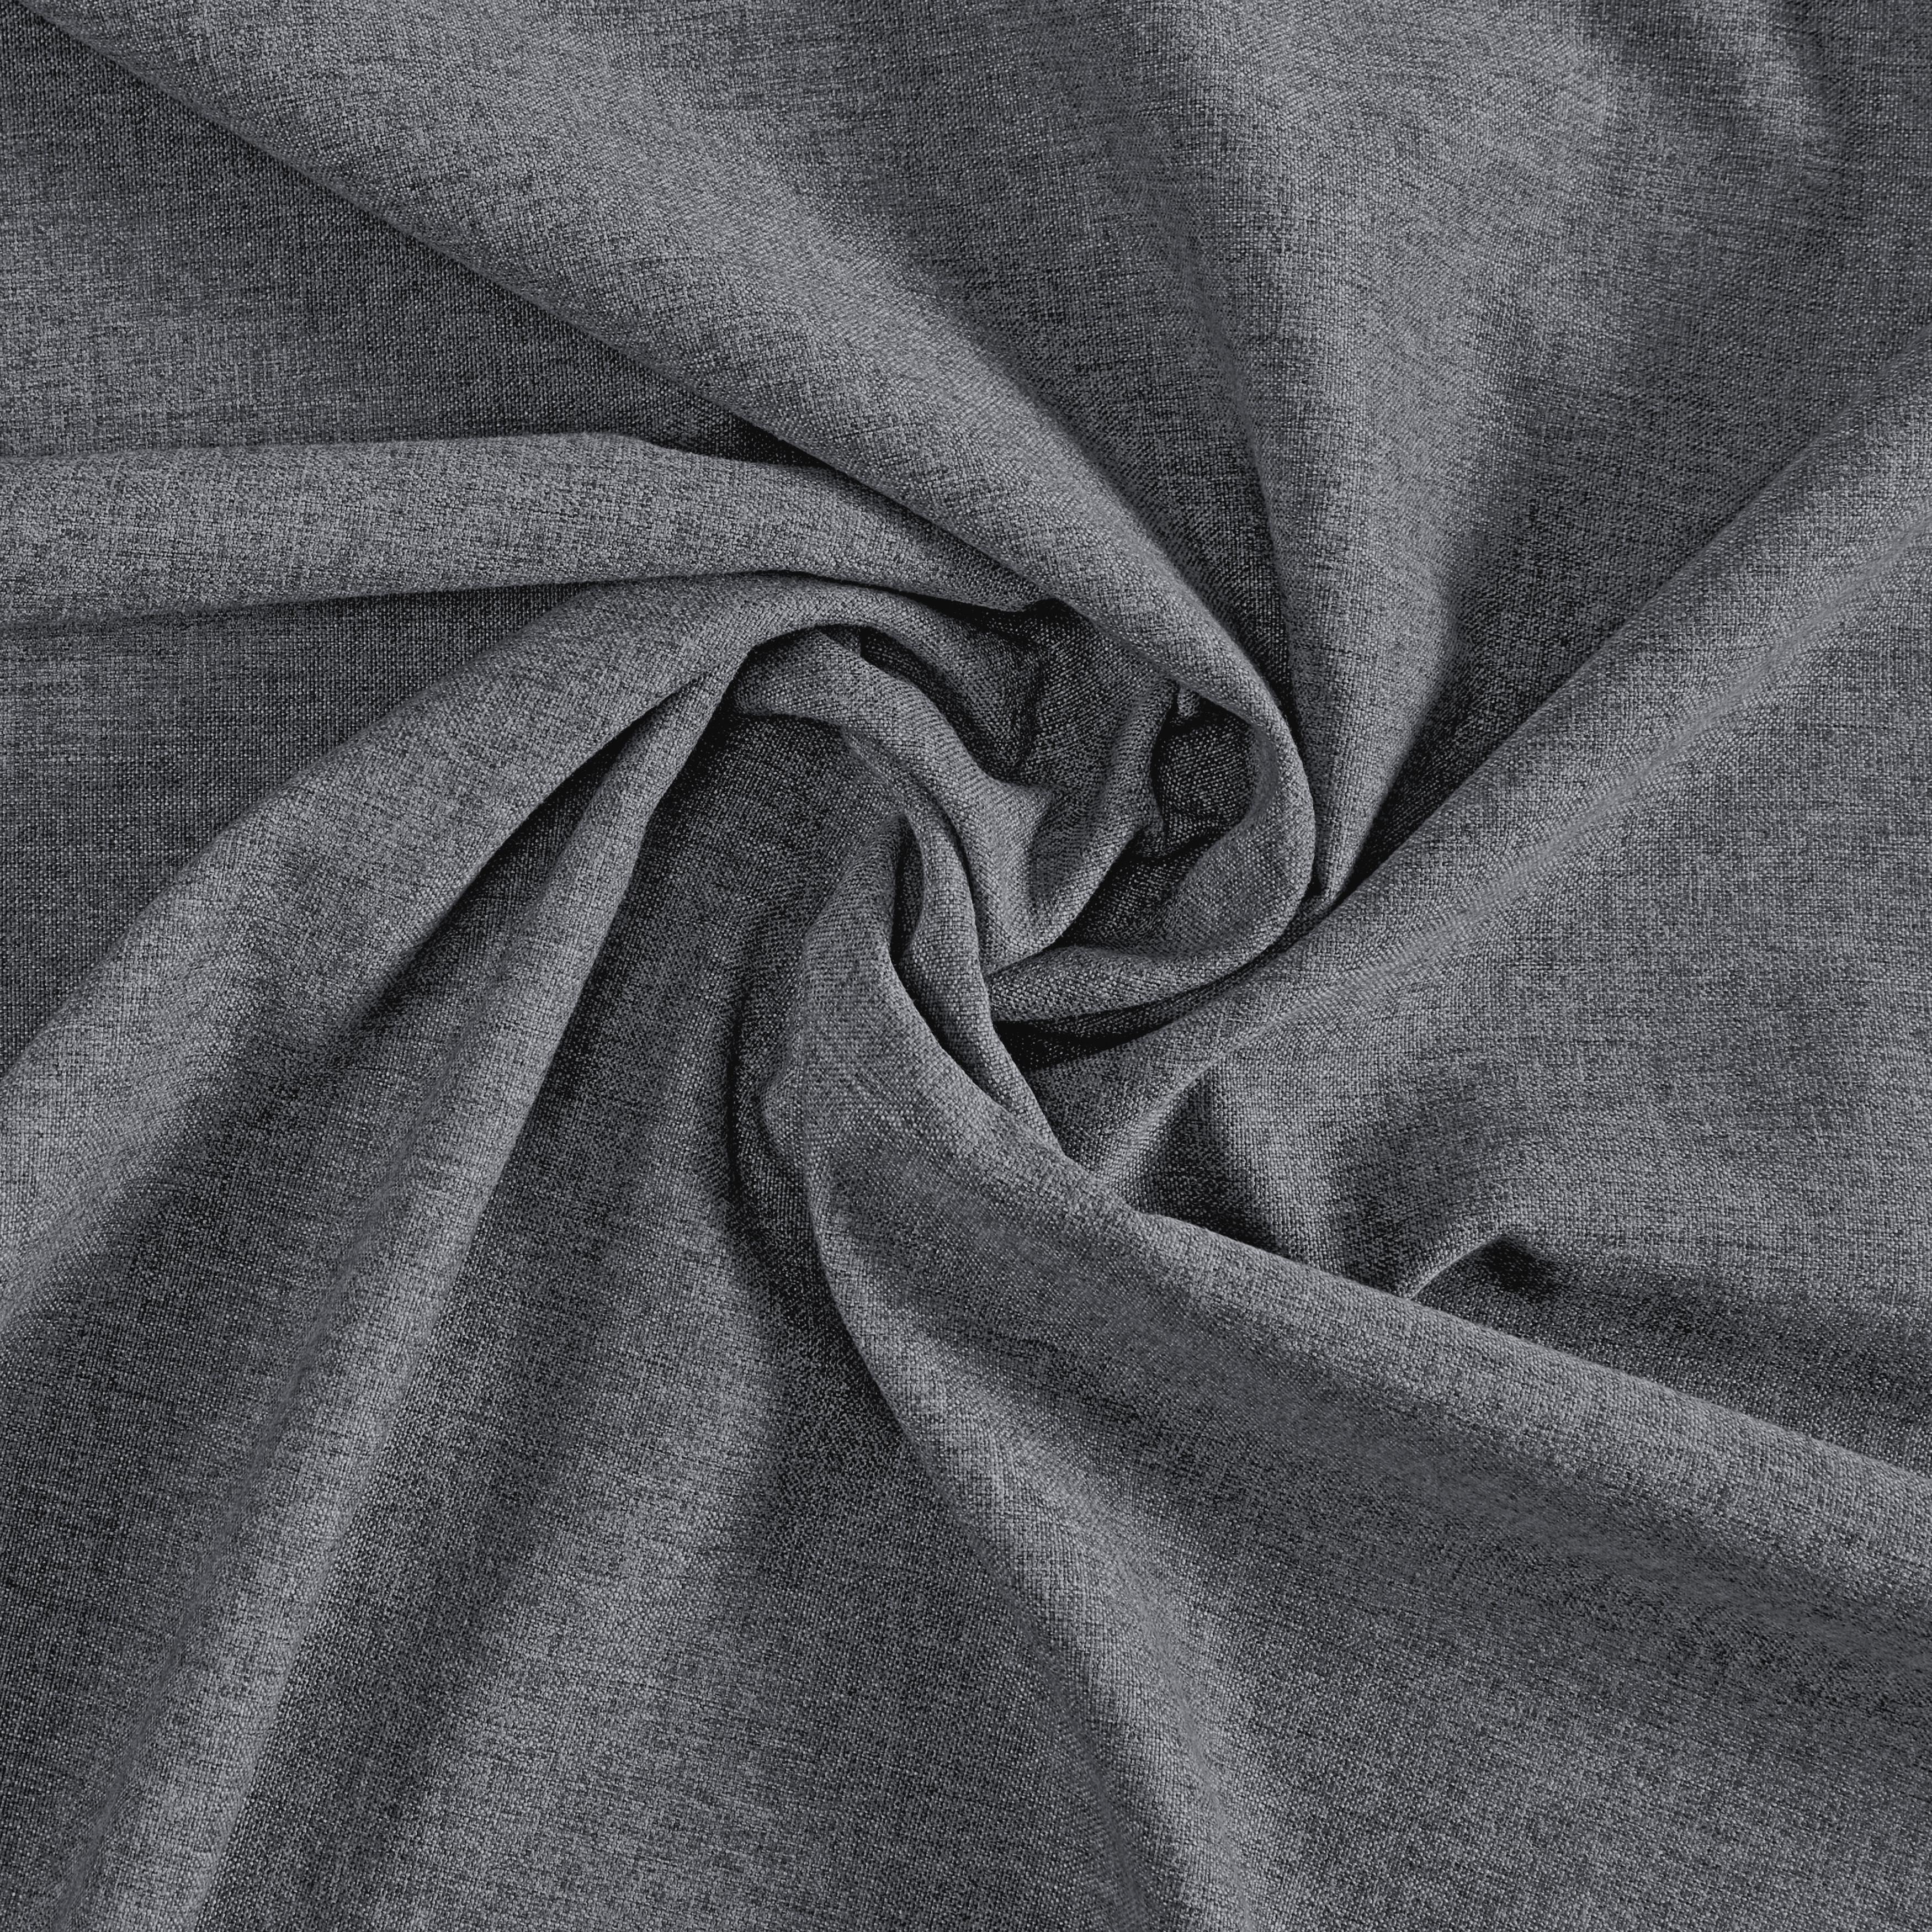 Készfüggöny Ulrich 175cm - Antracit, modern, Textil (135/175cm) - Modern Living